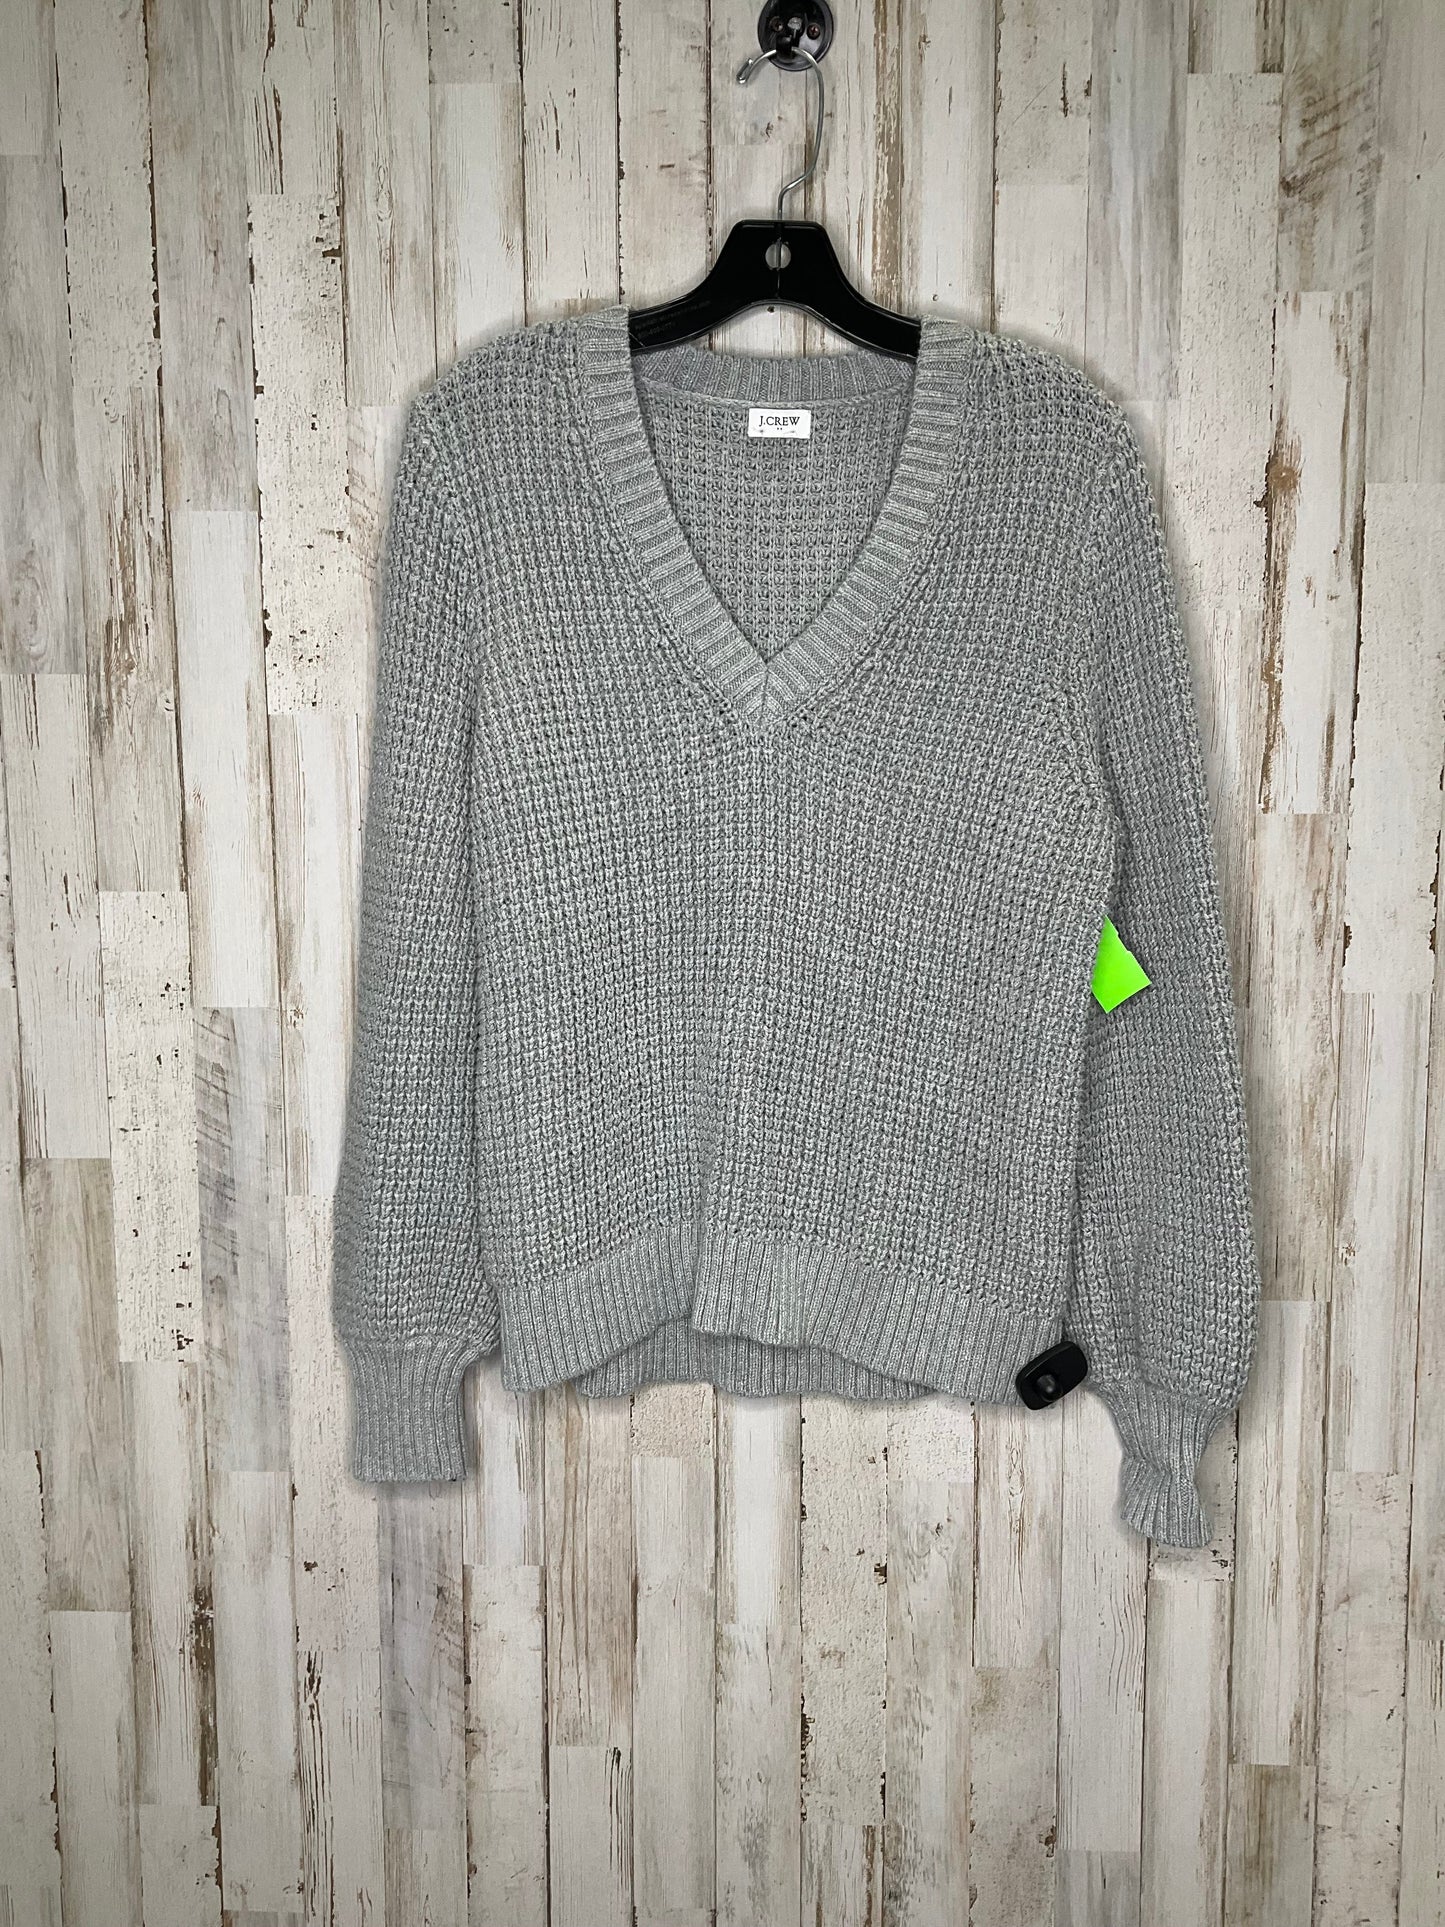 Sweater By J Crew  Size: Xl